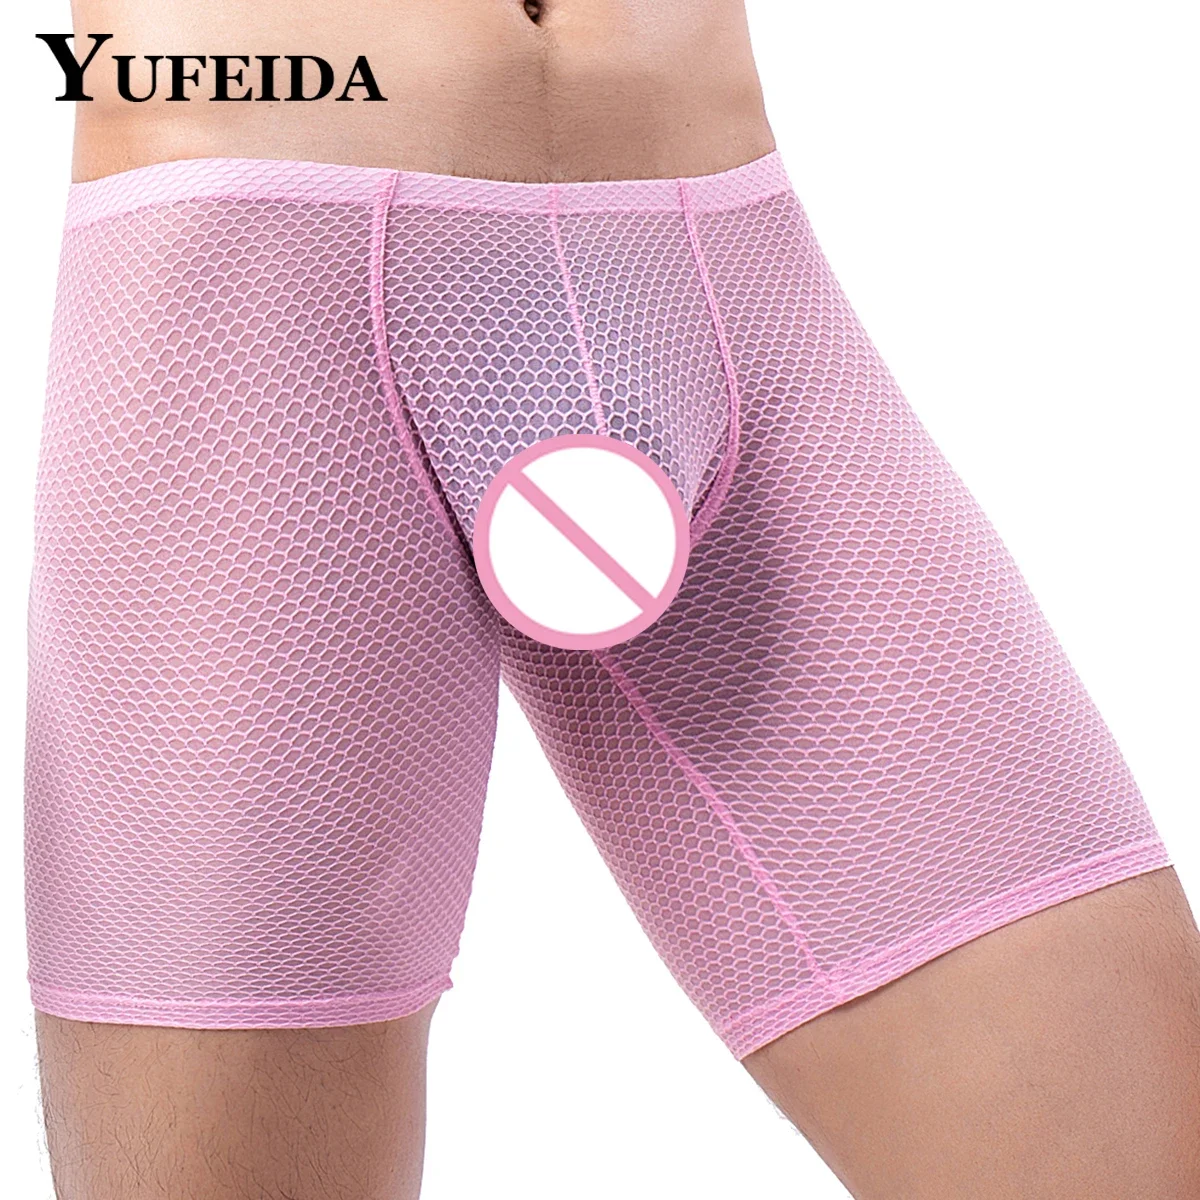 

YUFEIDA Men's Mesh Transparent Boxer Sexy Mesh See Through Shorts Long Legs Trunks Underwear Male U Convex Pouch Boxers Panties